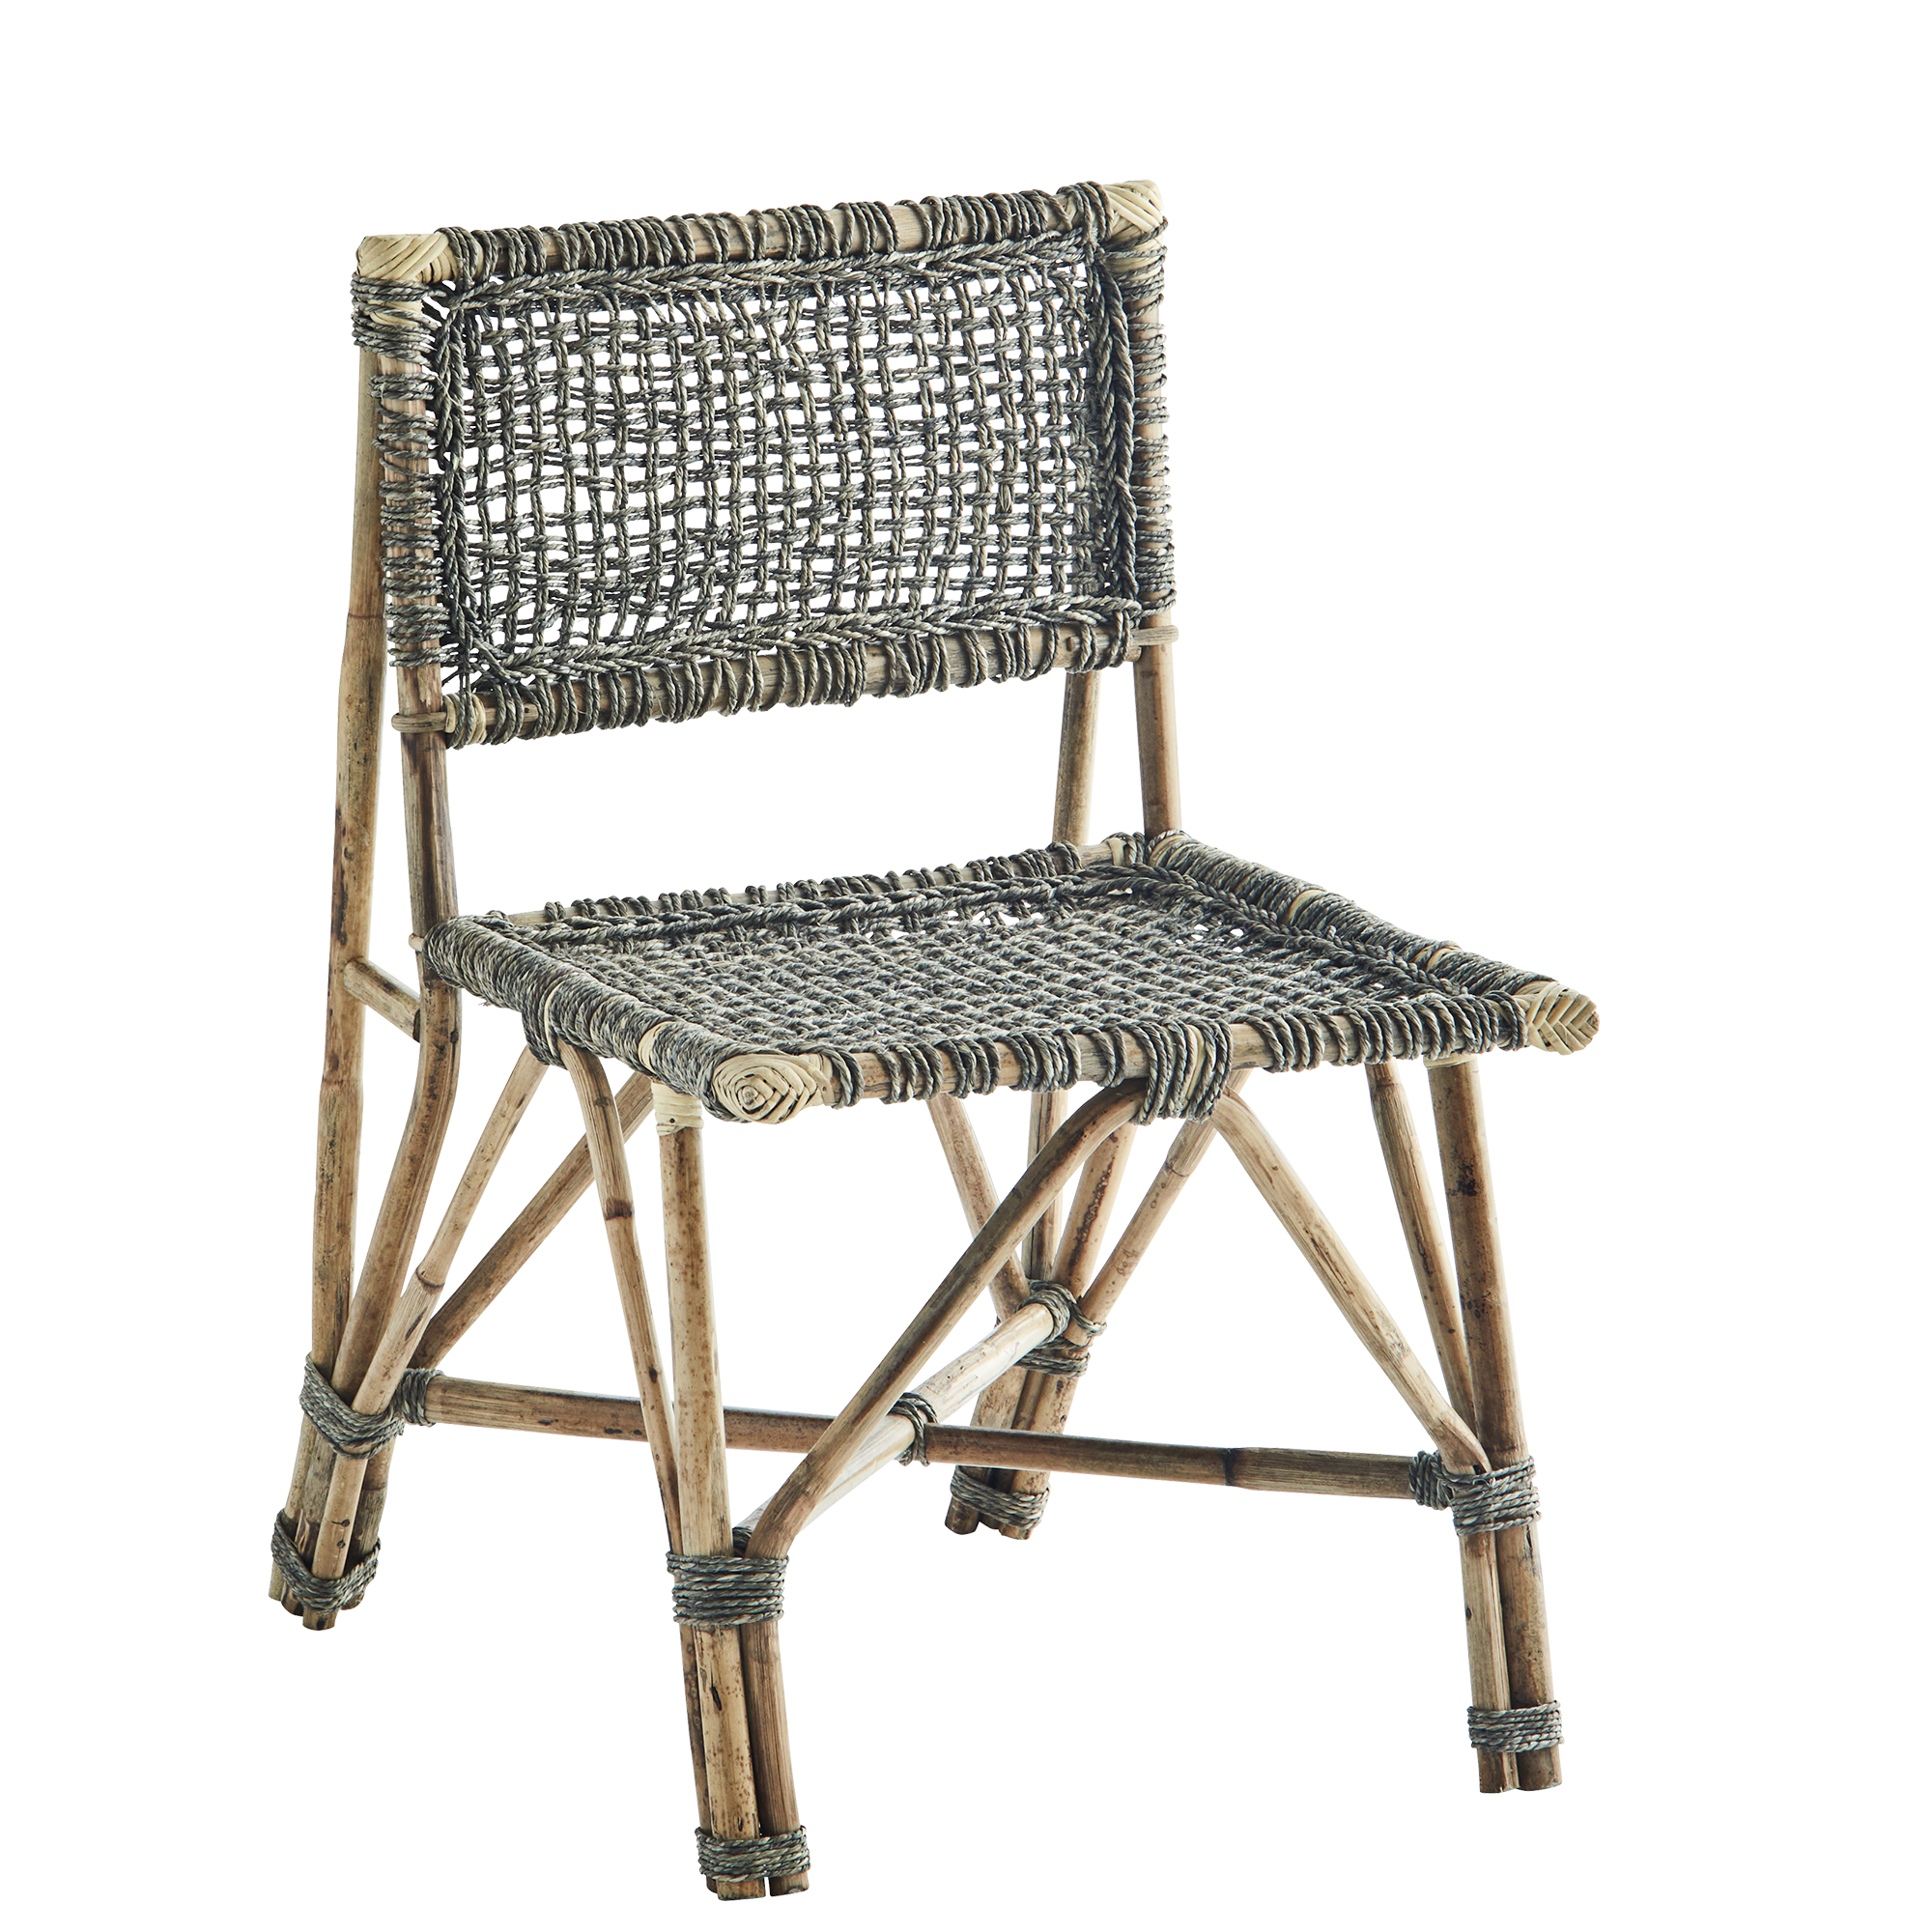 Bamboo chair w/ weaving